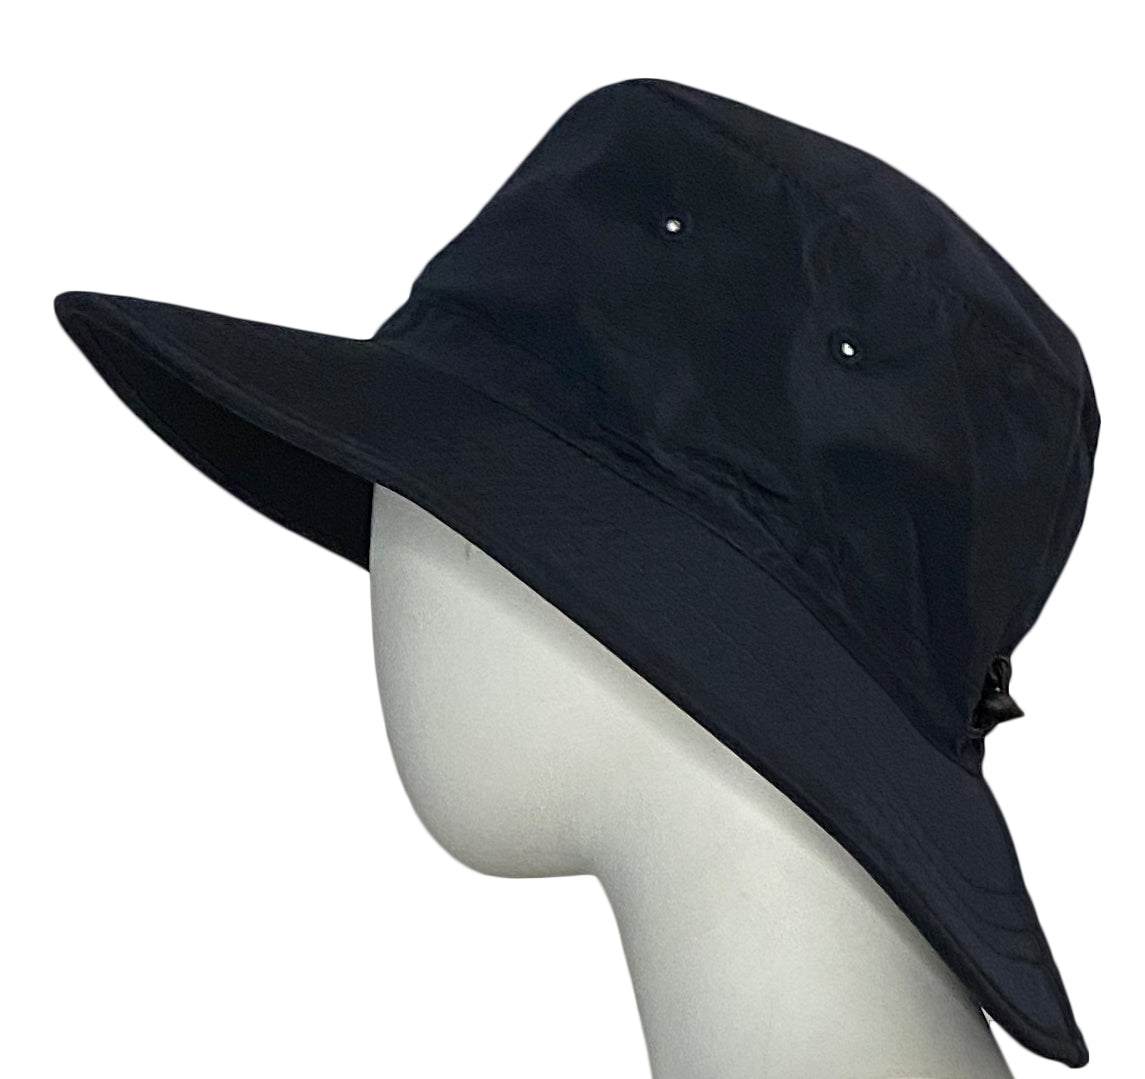 FLEMINGTON PRIMARY HYBRID HAT